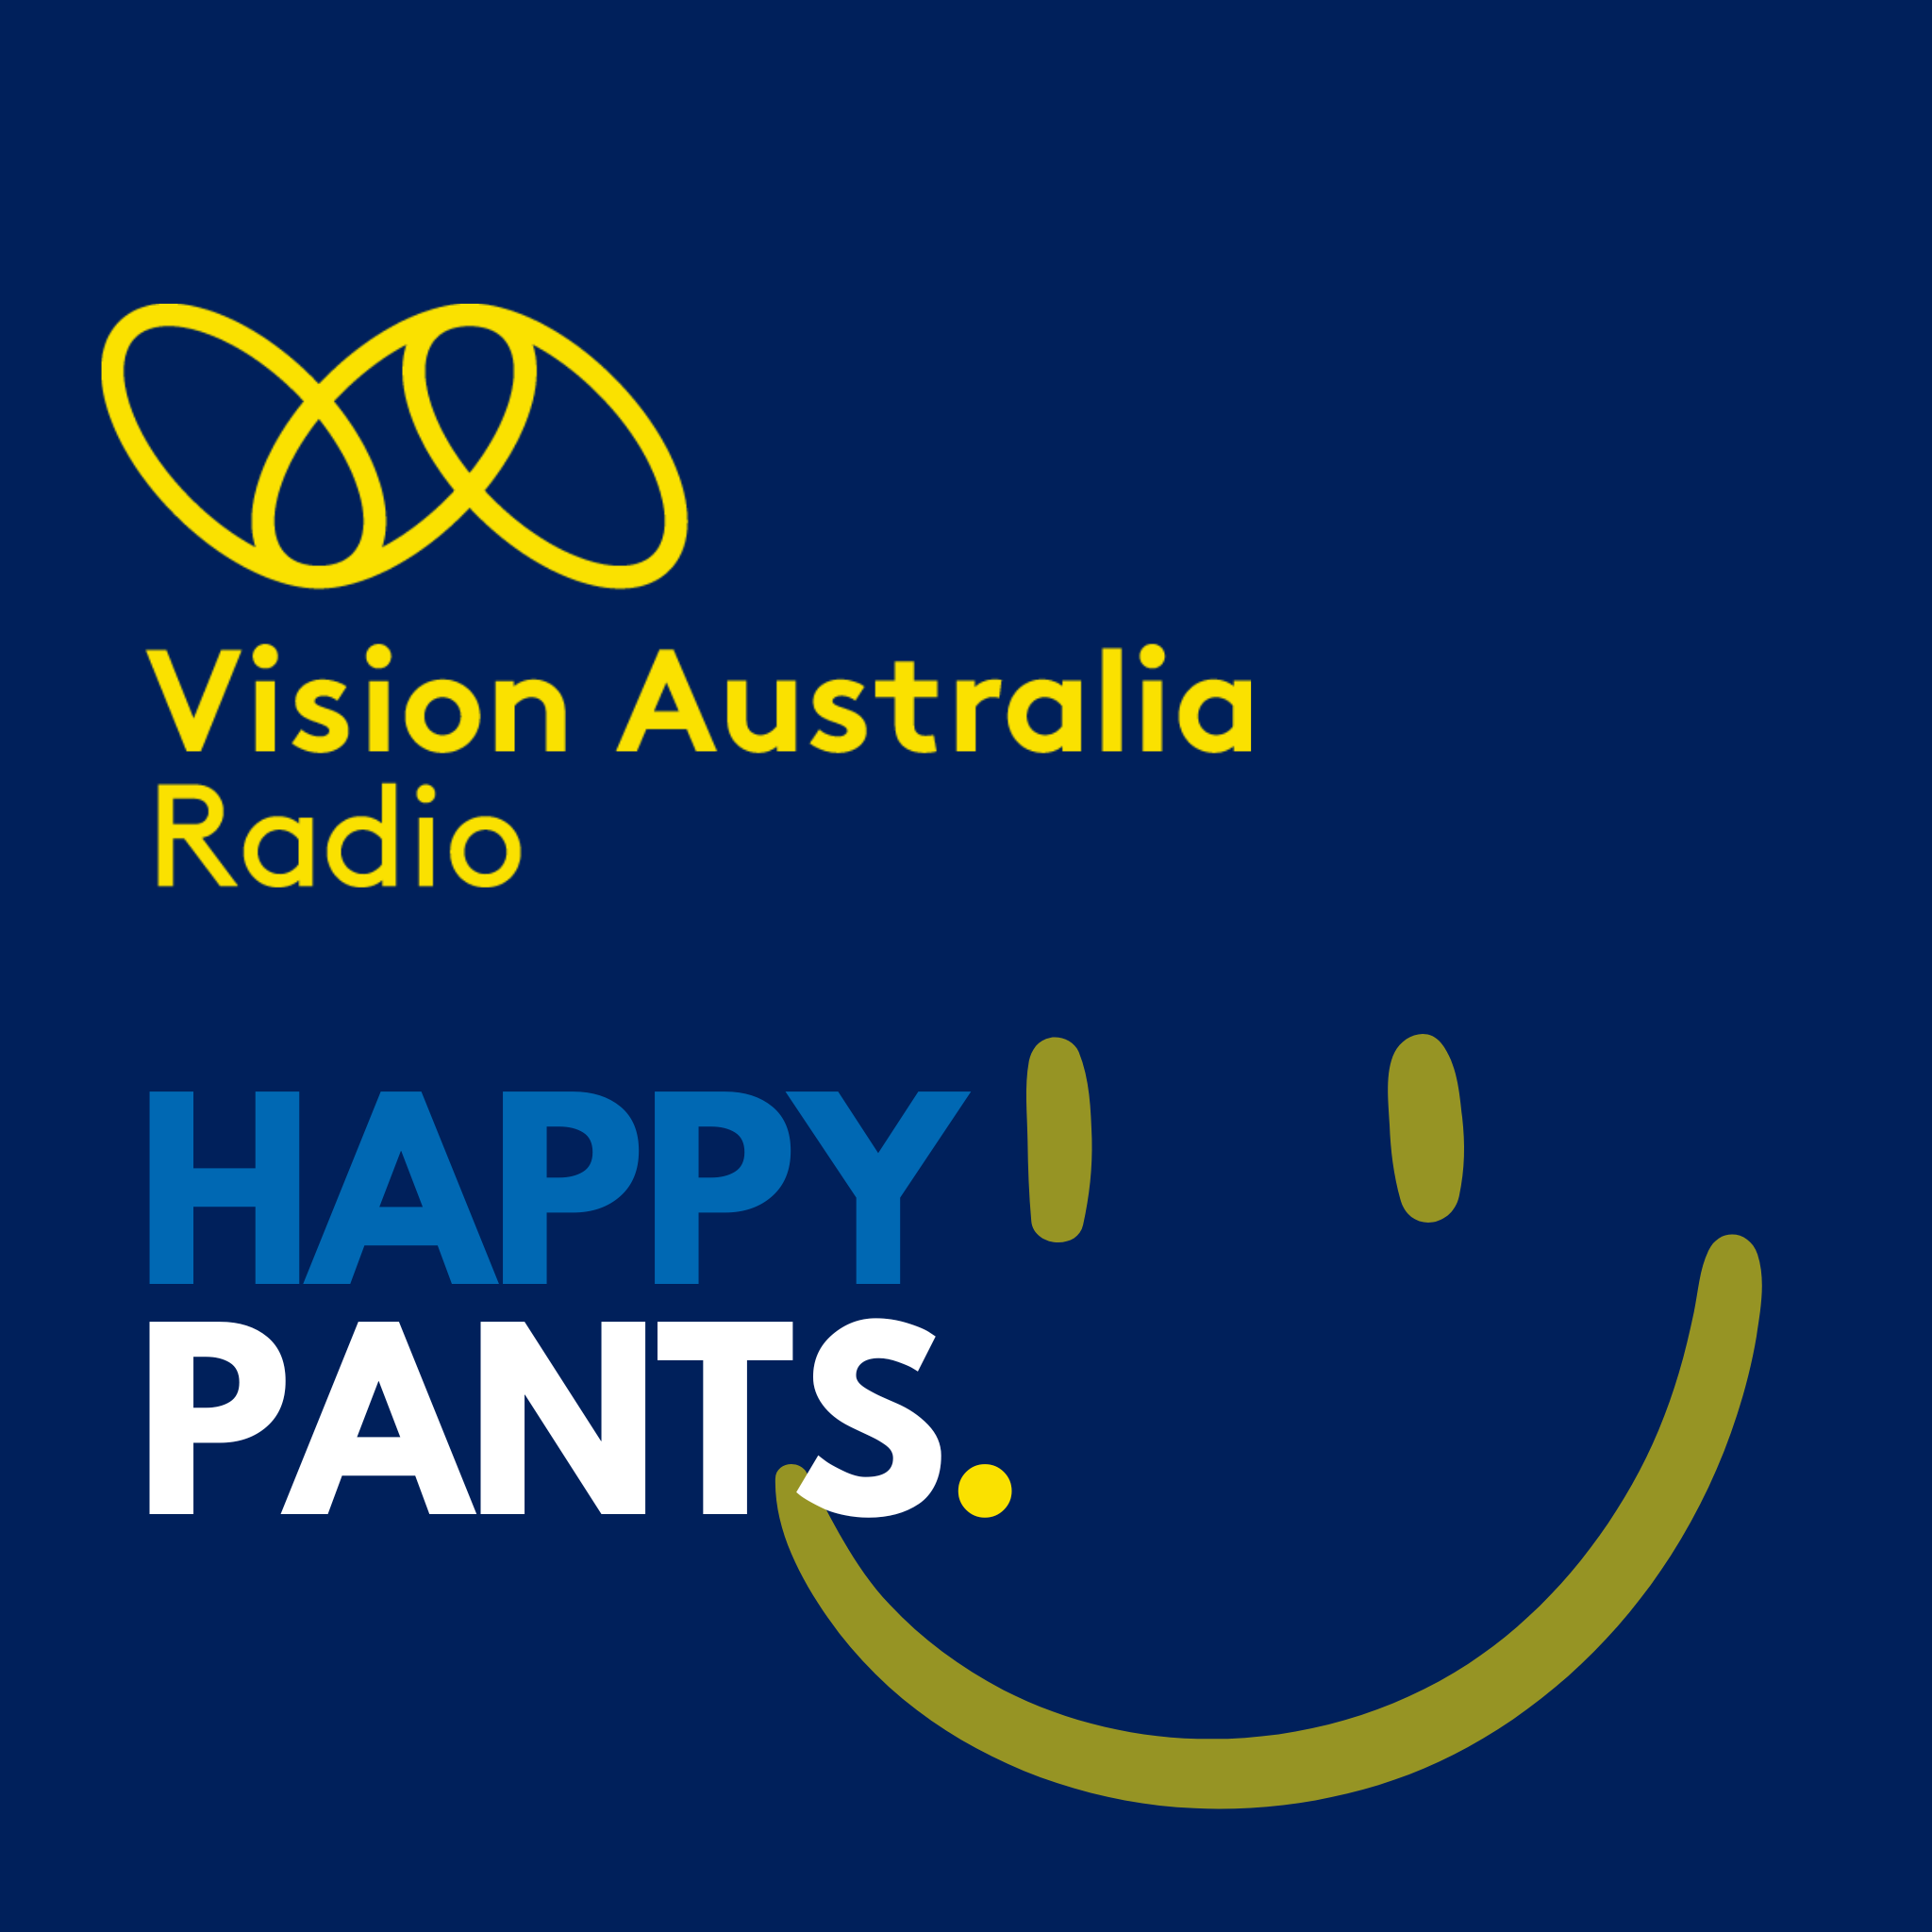 Happy Pants - December 30